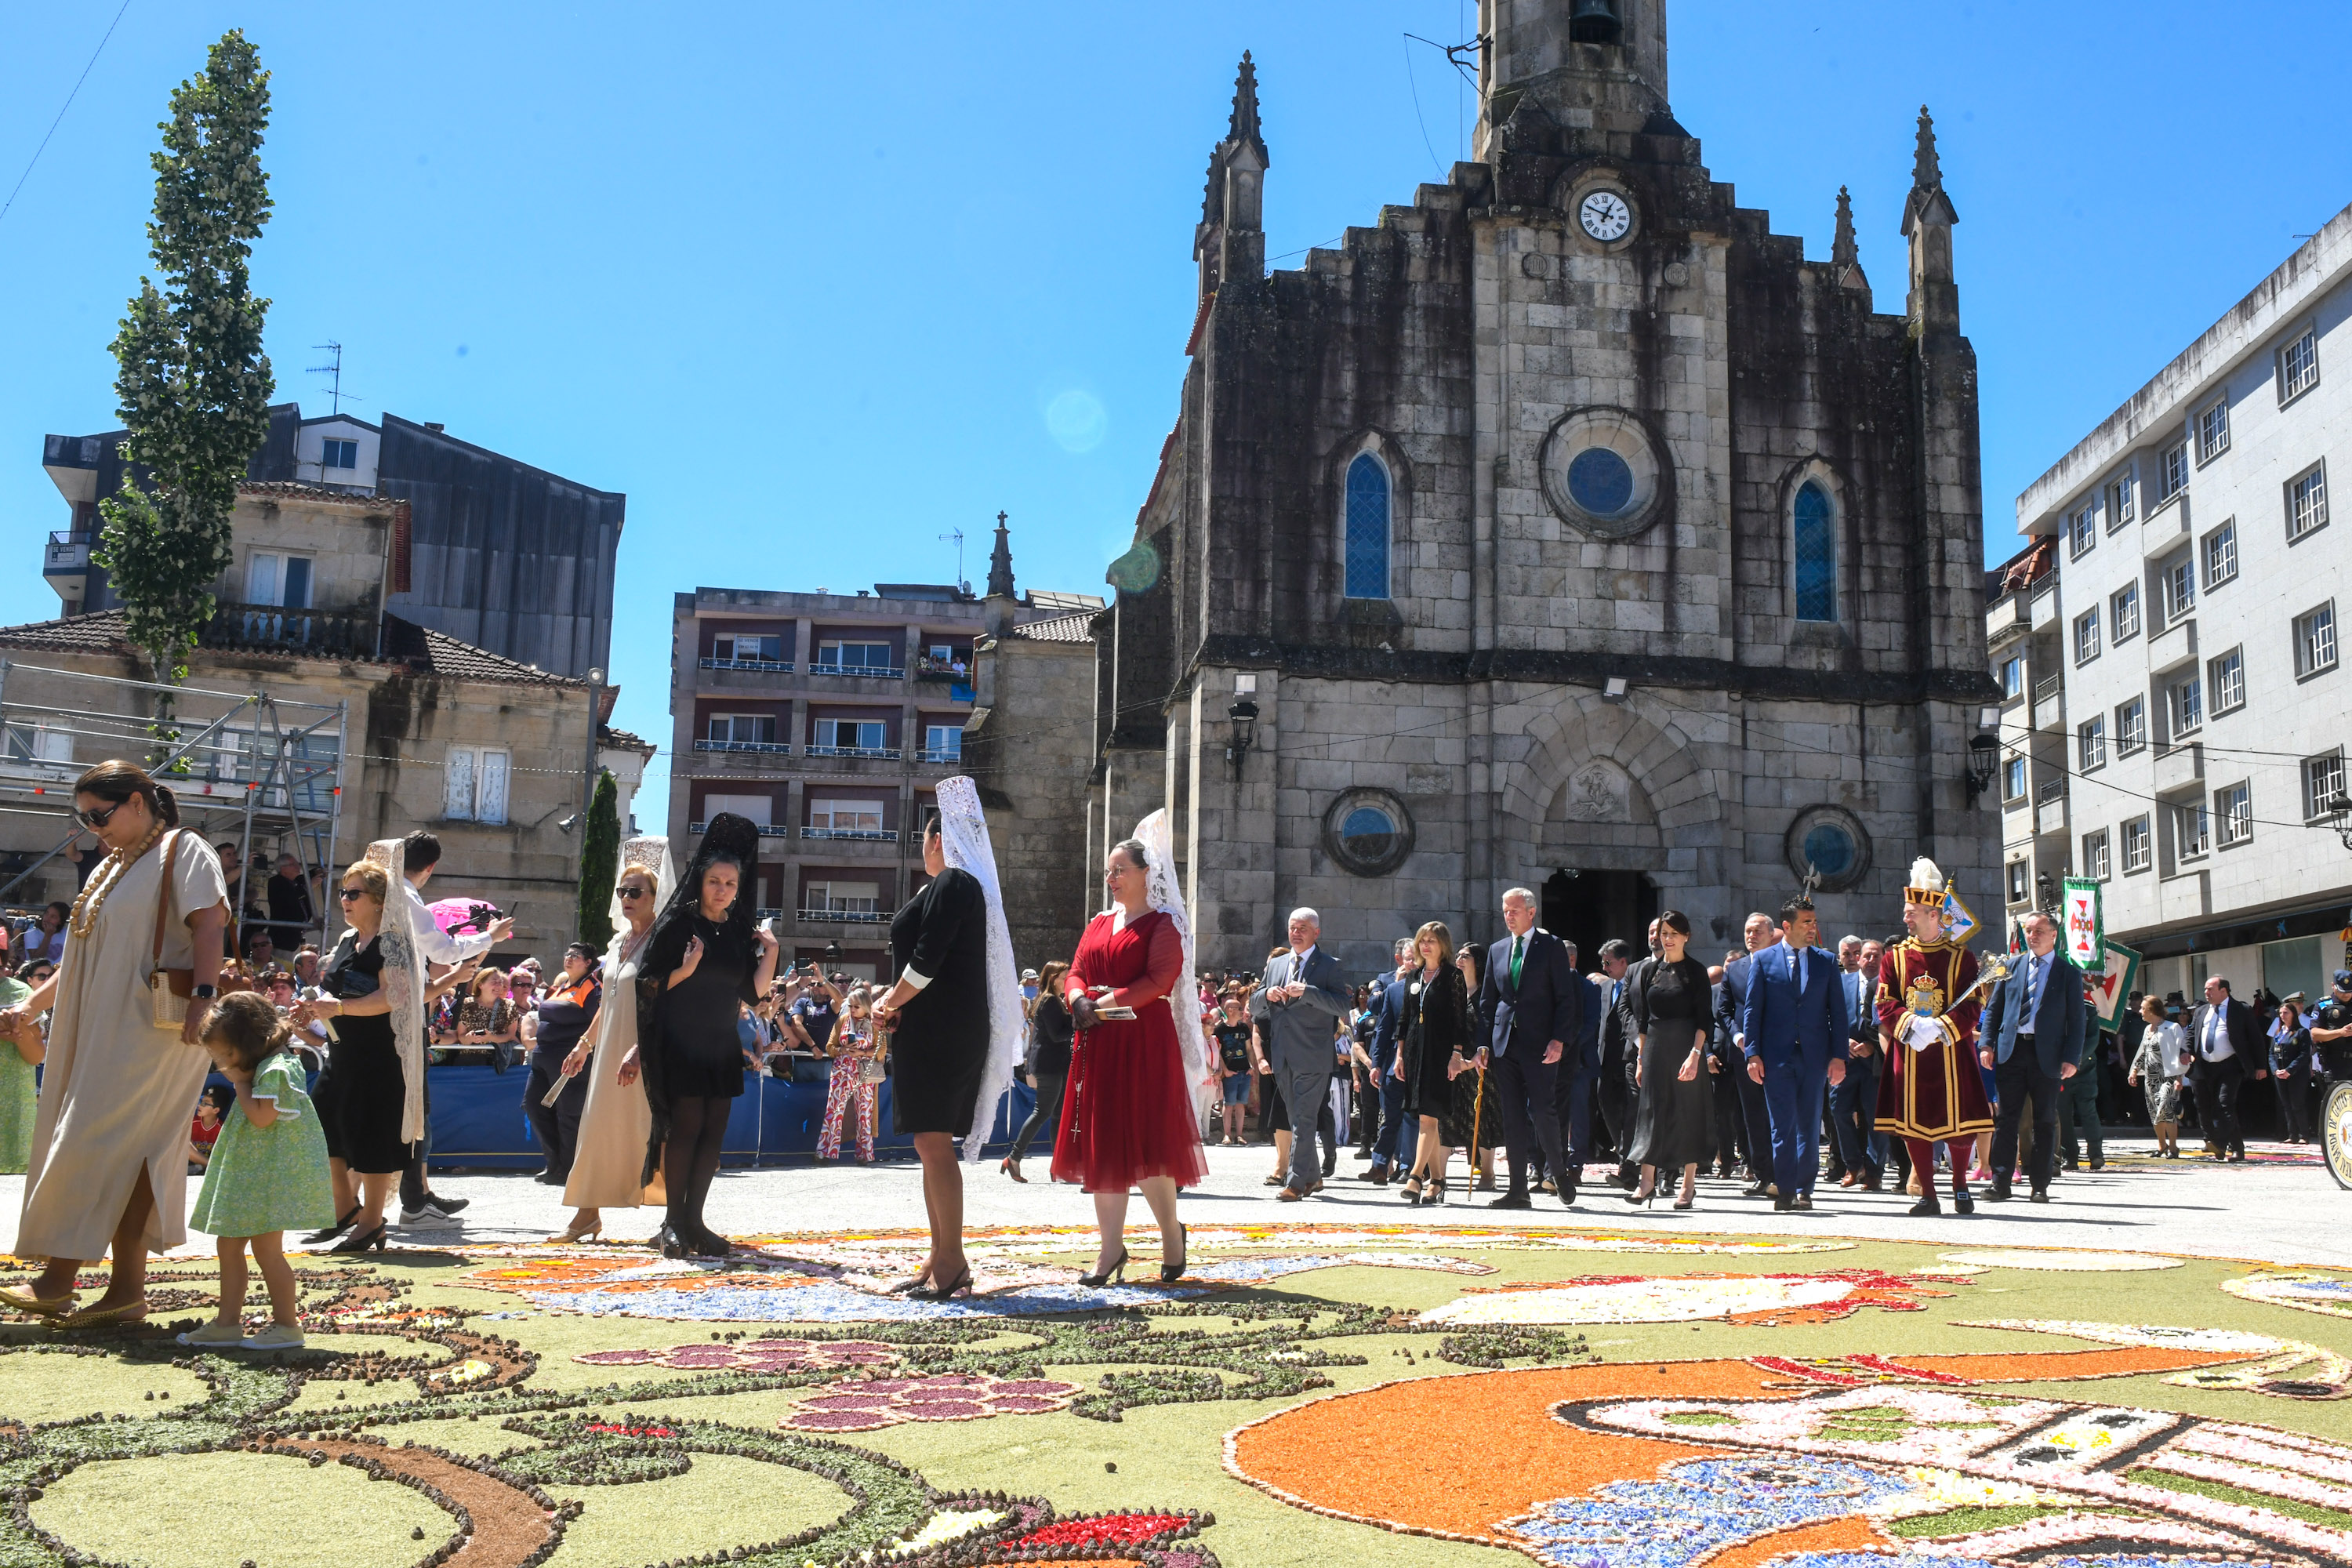 Image 6 of article Alfonso Rueda asiste á procesión do Corpus Christi de Ponteareas